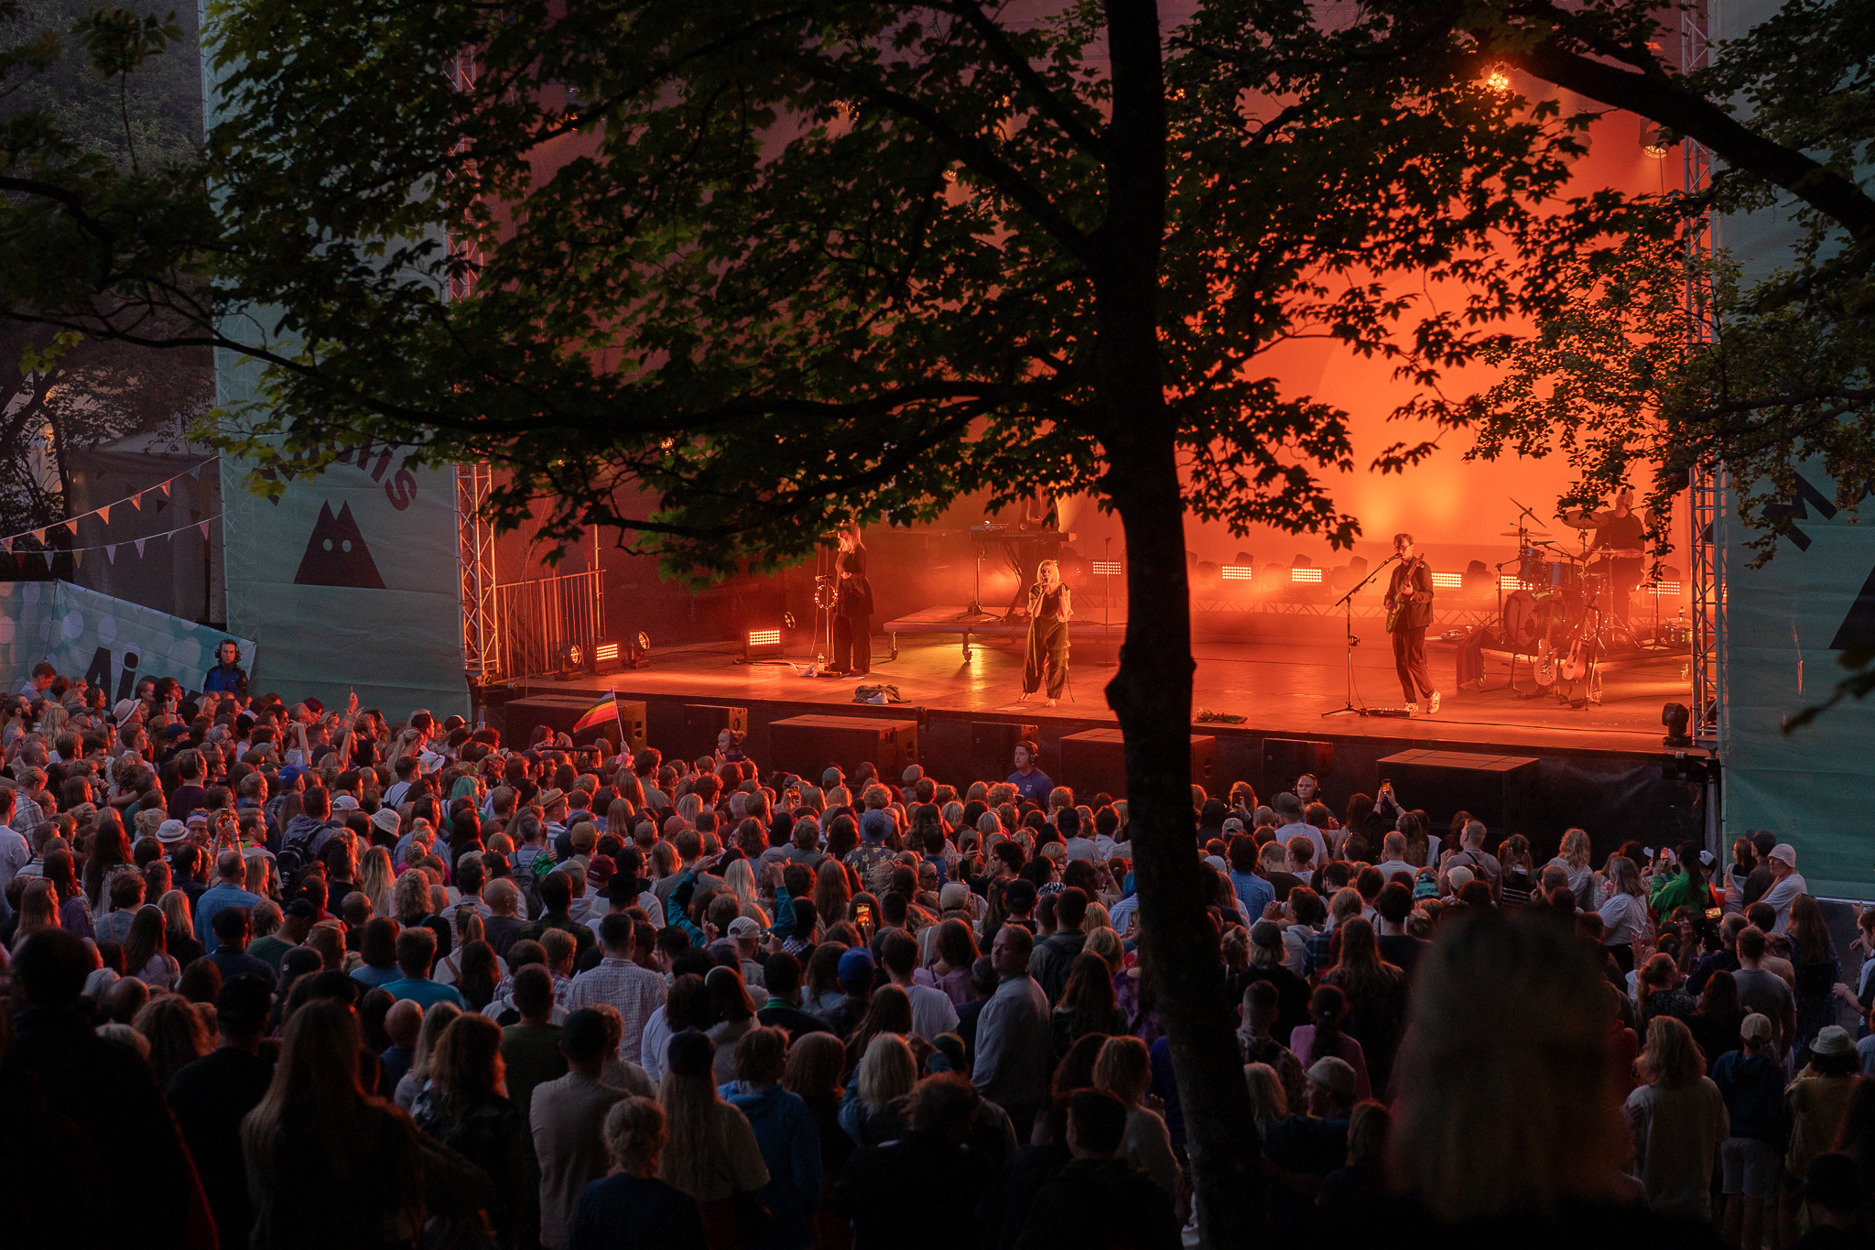 Artist på scene foran stort publikum under Mablisfestivalen i Vålandskogen